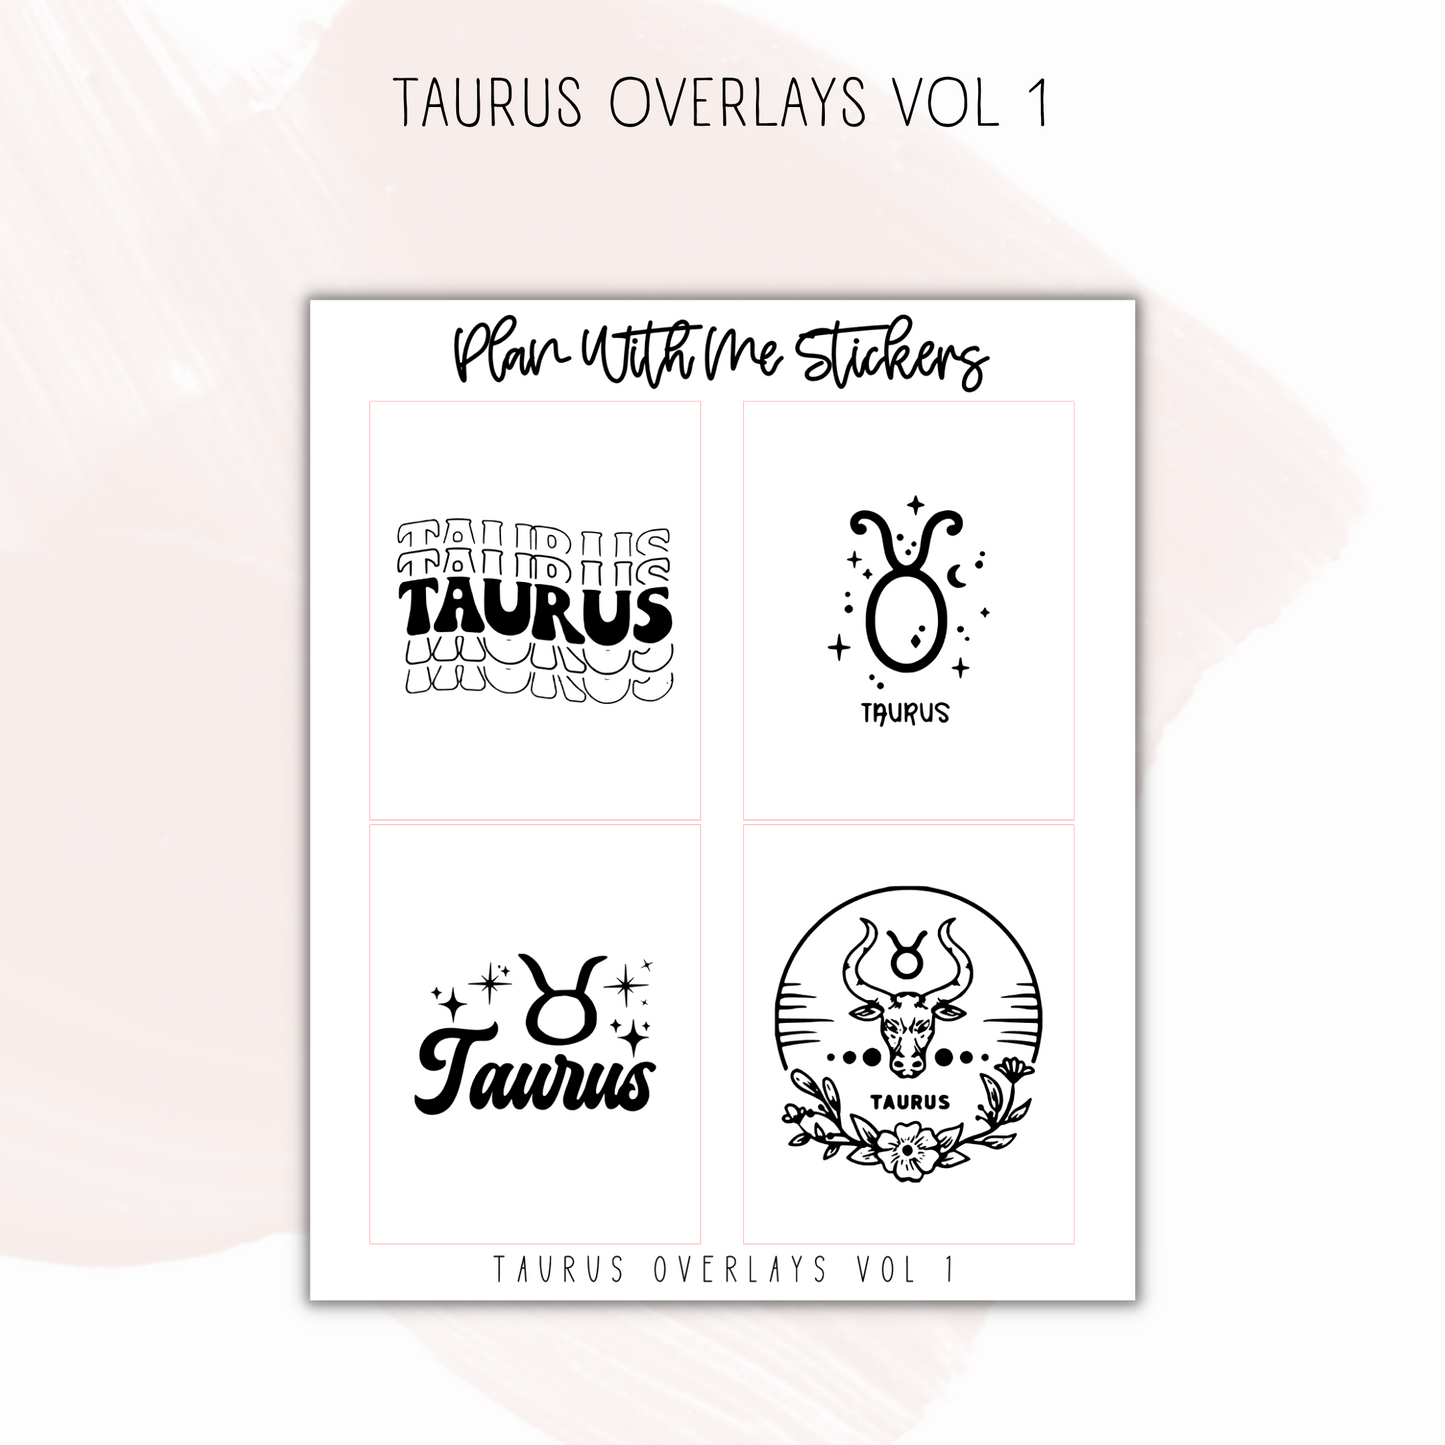 Taurus Overlays Vol 1